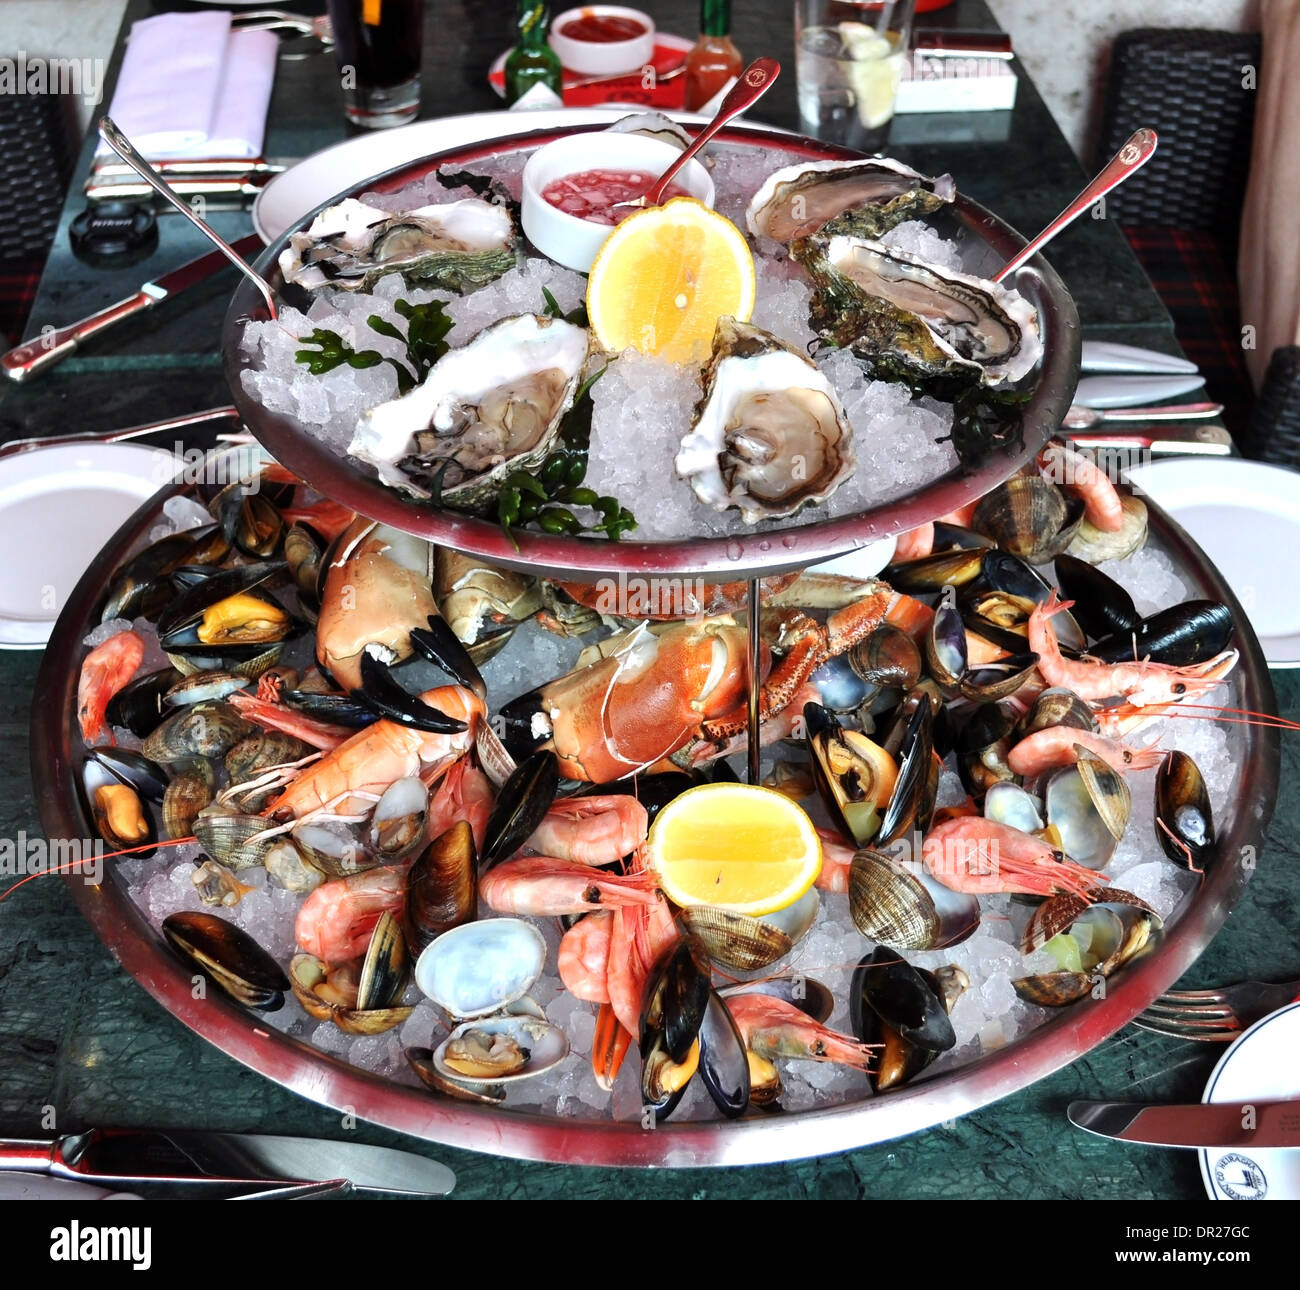 Plateau de Obst de Mer (Meer Essen Platte) in einem Londoner restaurant Stockfoto